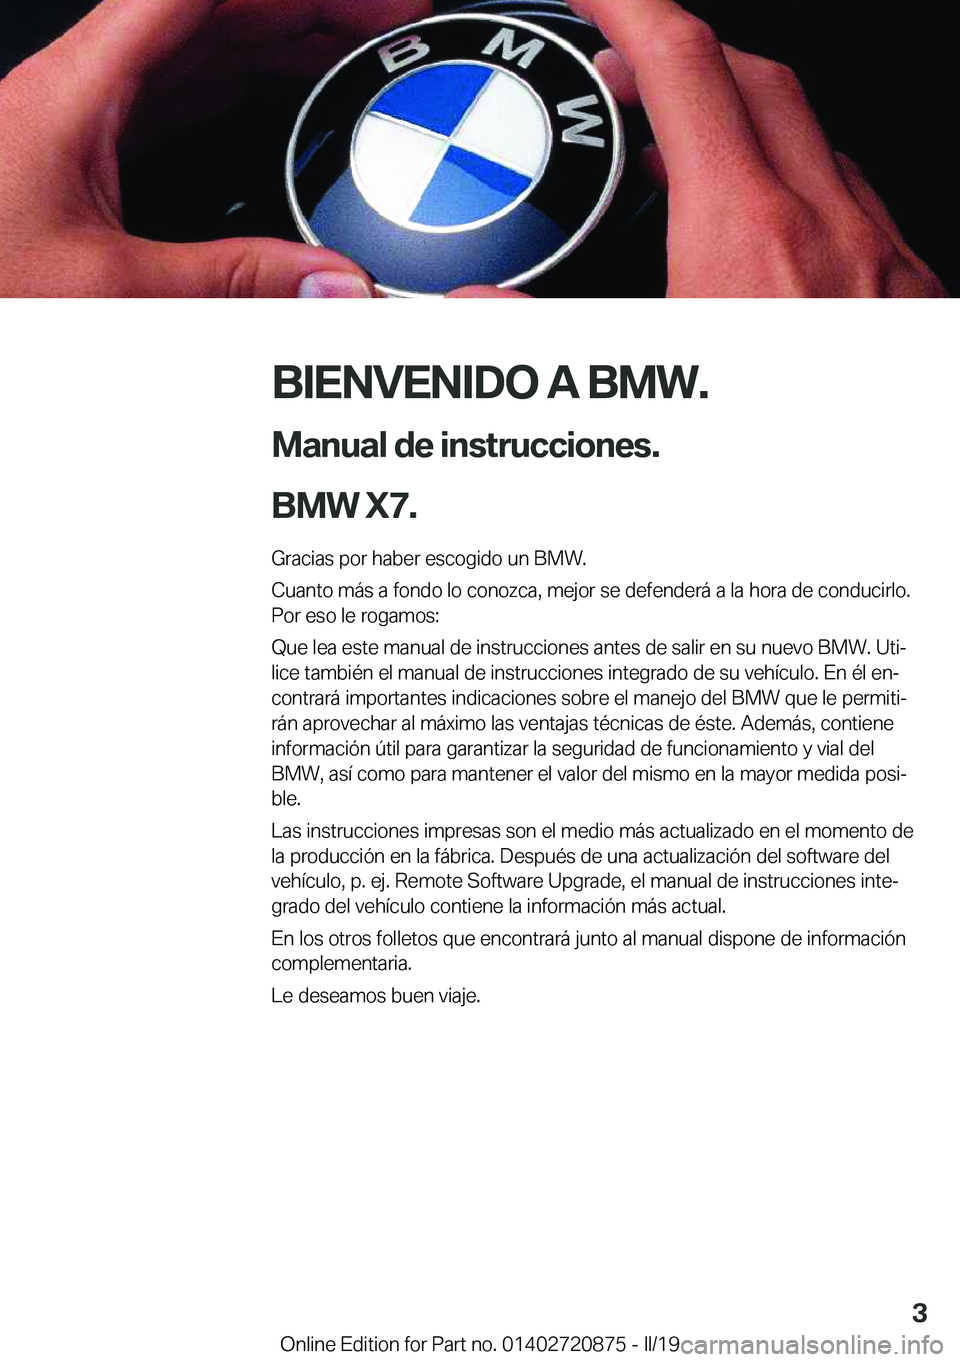 BMW X7 2019  Manuales de Empleo (in Spanish) �B�I�E�N�V�E�N�I�D�O��A��B�M�W�.
�M�a�n�u�a�l��d�e��i�n�s�t�r�u�c�c�i�o�n�e�s�.
�B�M�W��X�7�. �G�r�a�c�i�a�s��p�o�r��h�a�b�e�r��e�s�c�o�g�i�d�o��u�n��B�M�W�.�C�u�a�n�t�o��m�